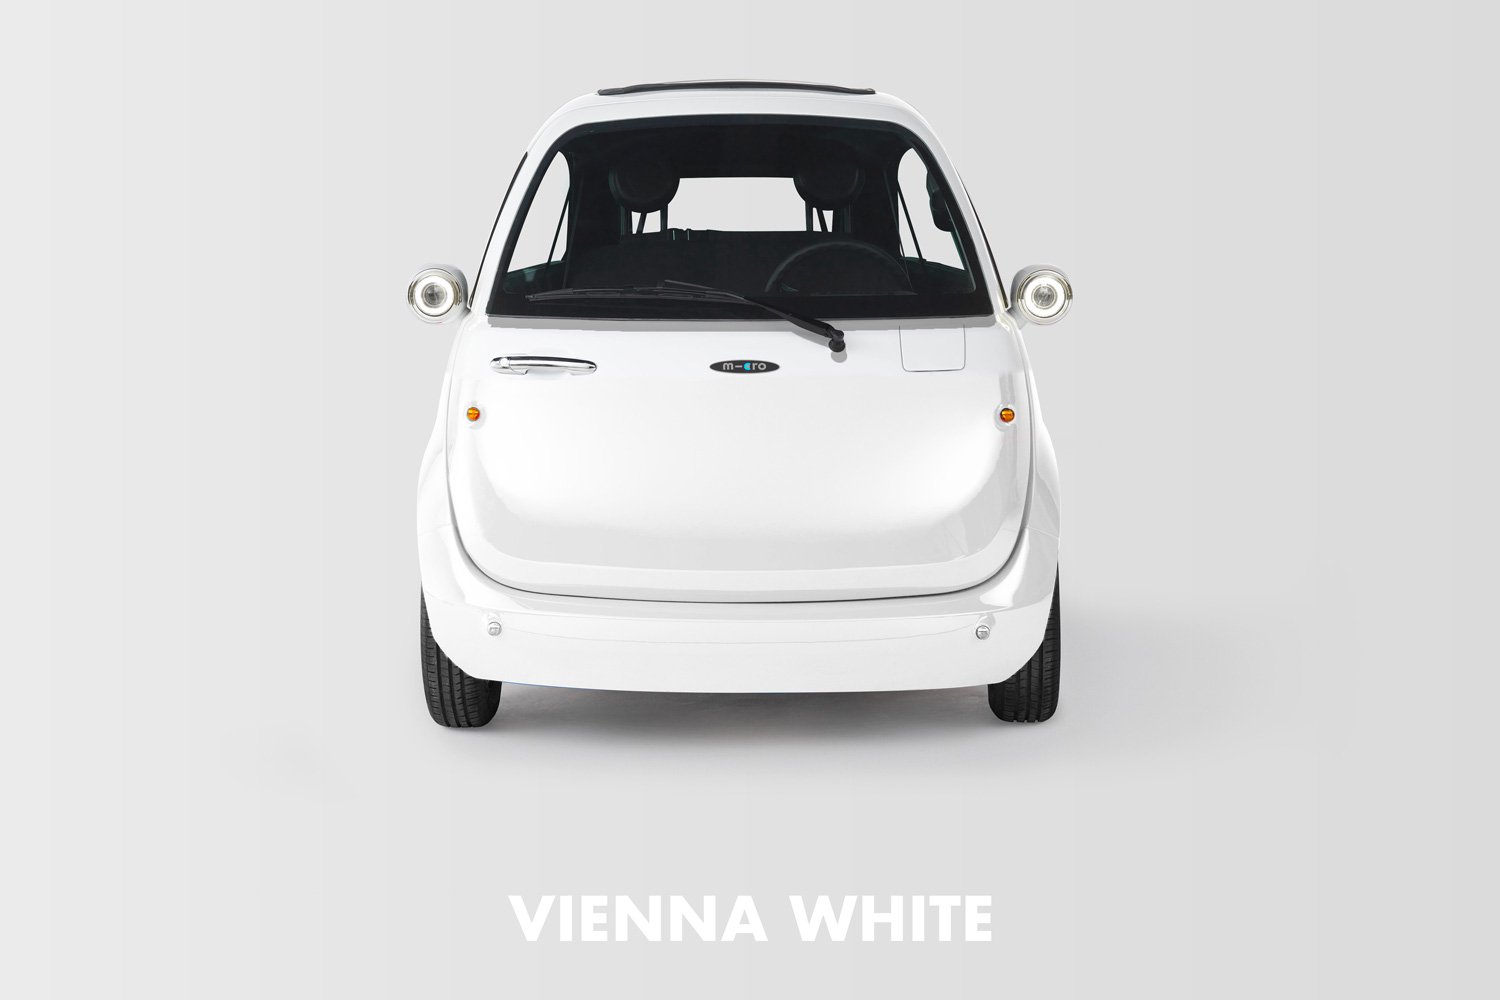 microlino world's smallest electric car 1